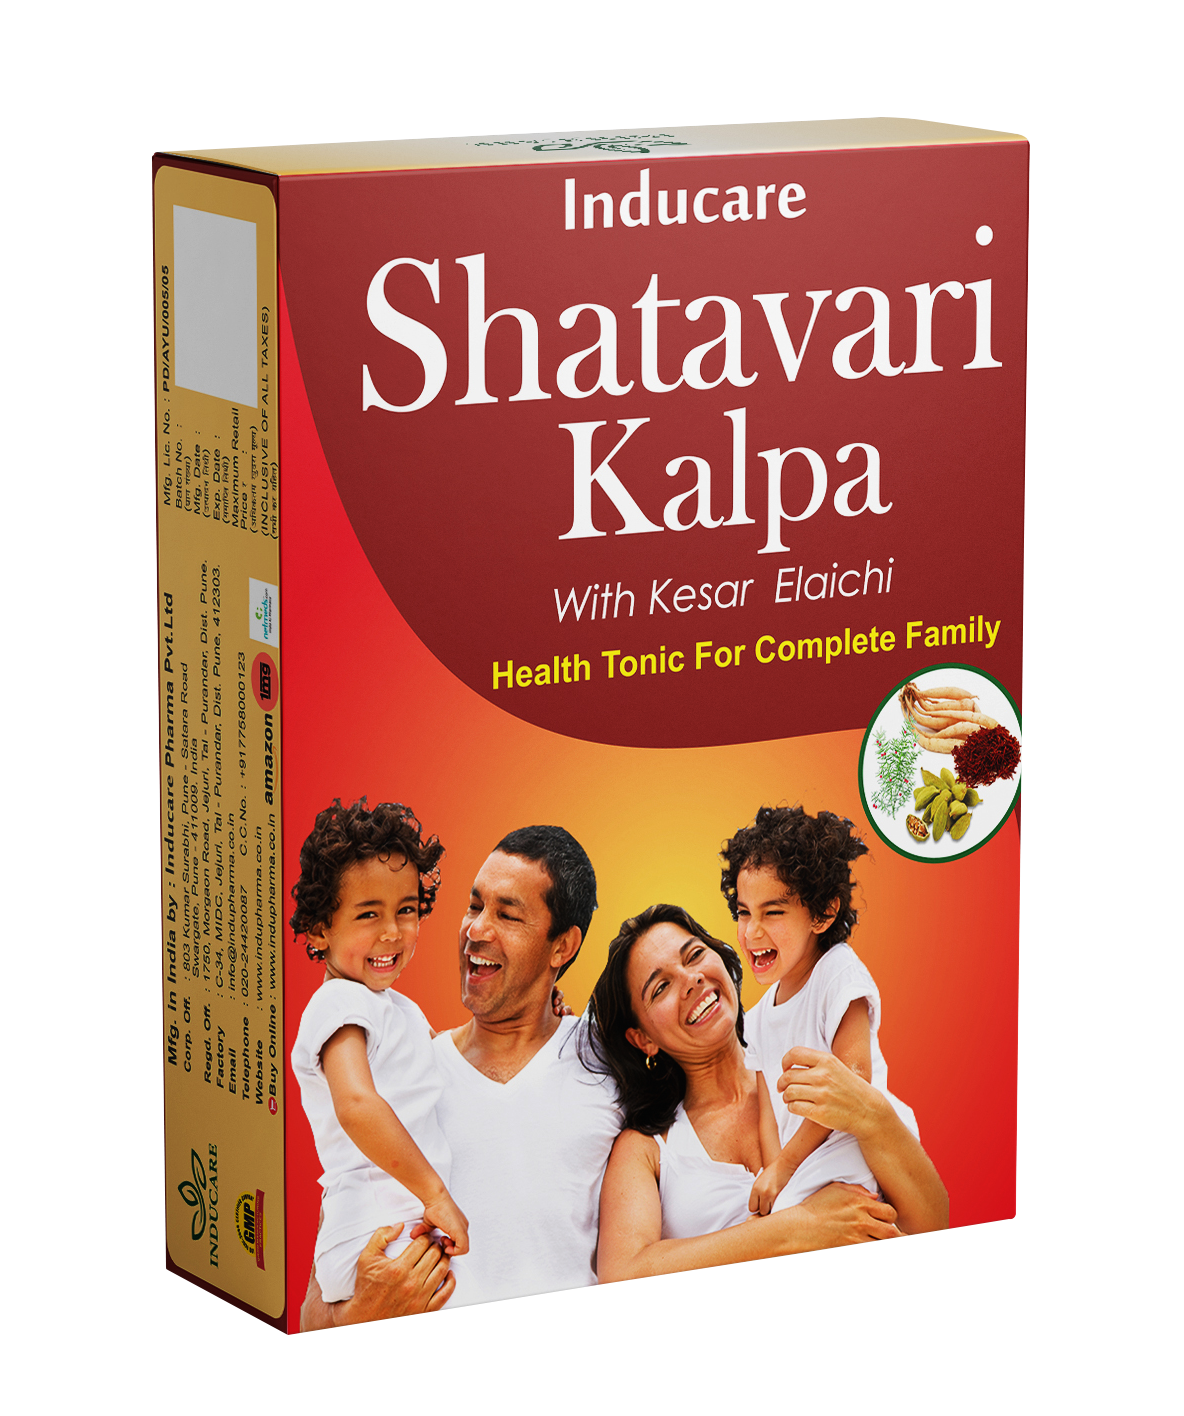 Buy Inducare Pharma Shatavari Kalpa at Best Price Online